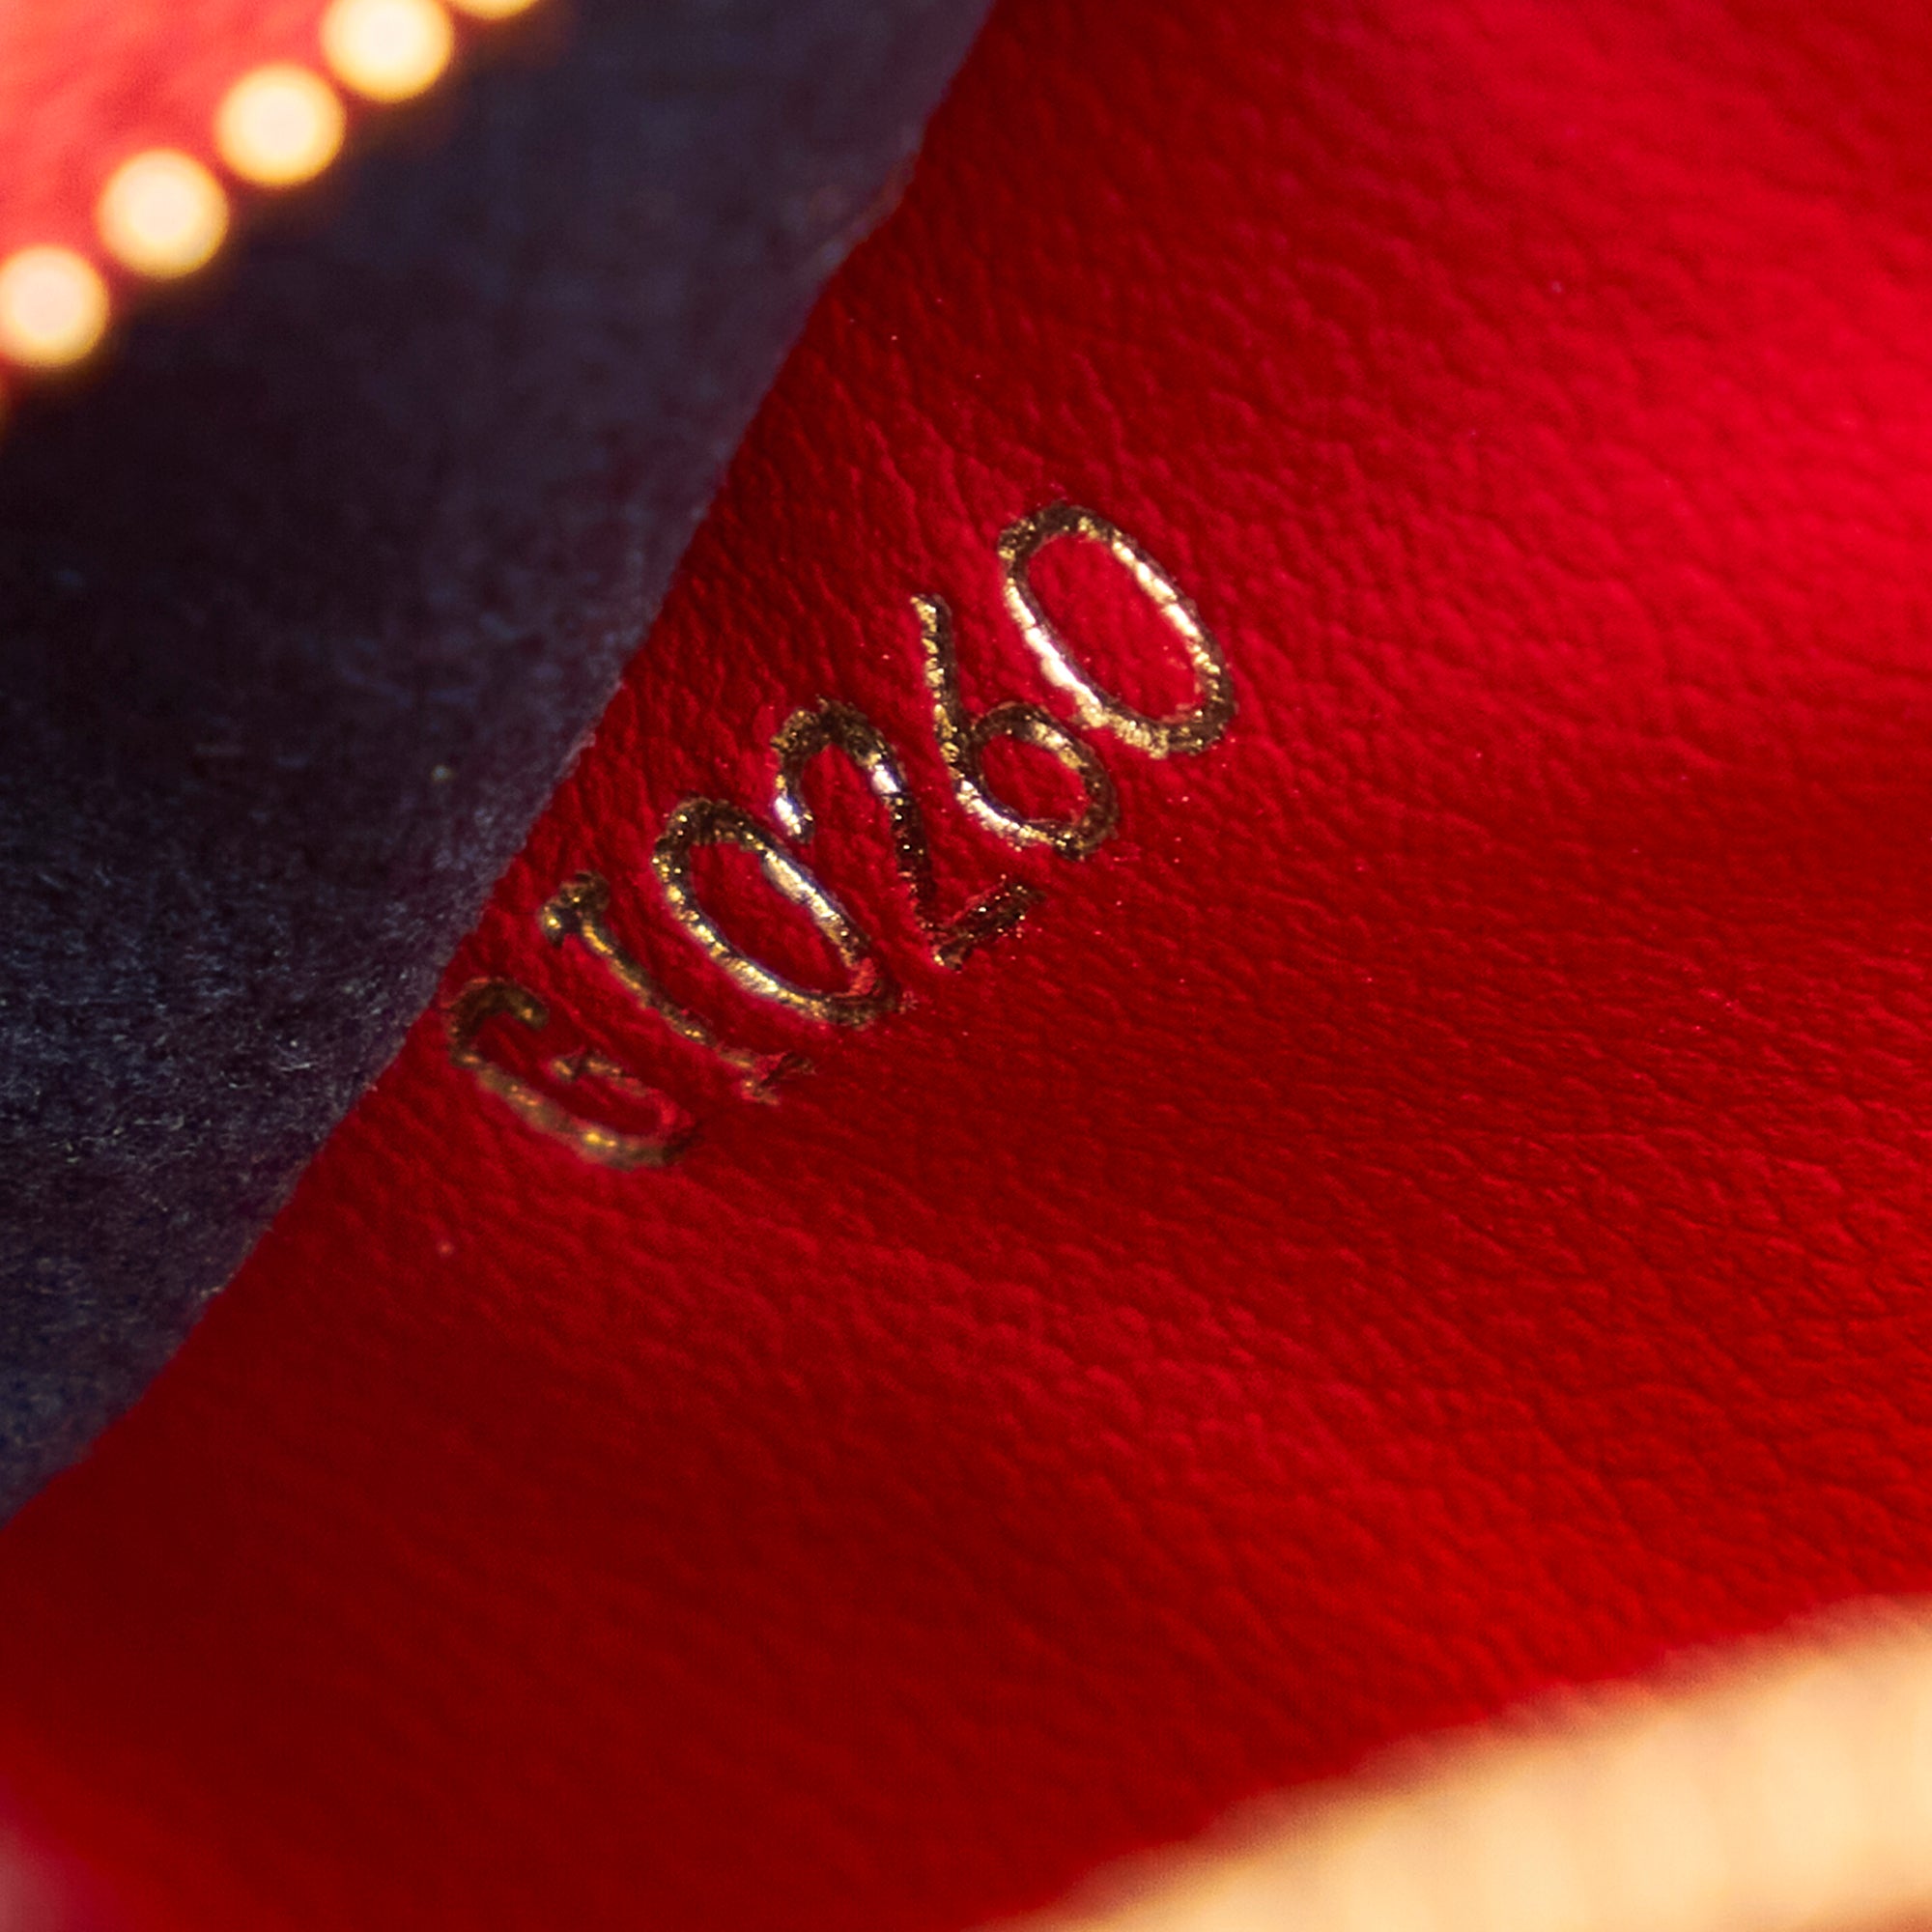 Louis Vuitton Double Zip Pochette in Red